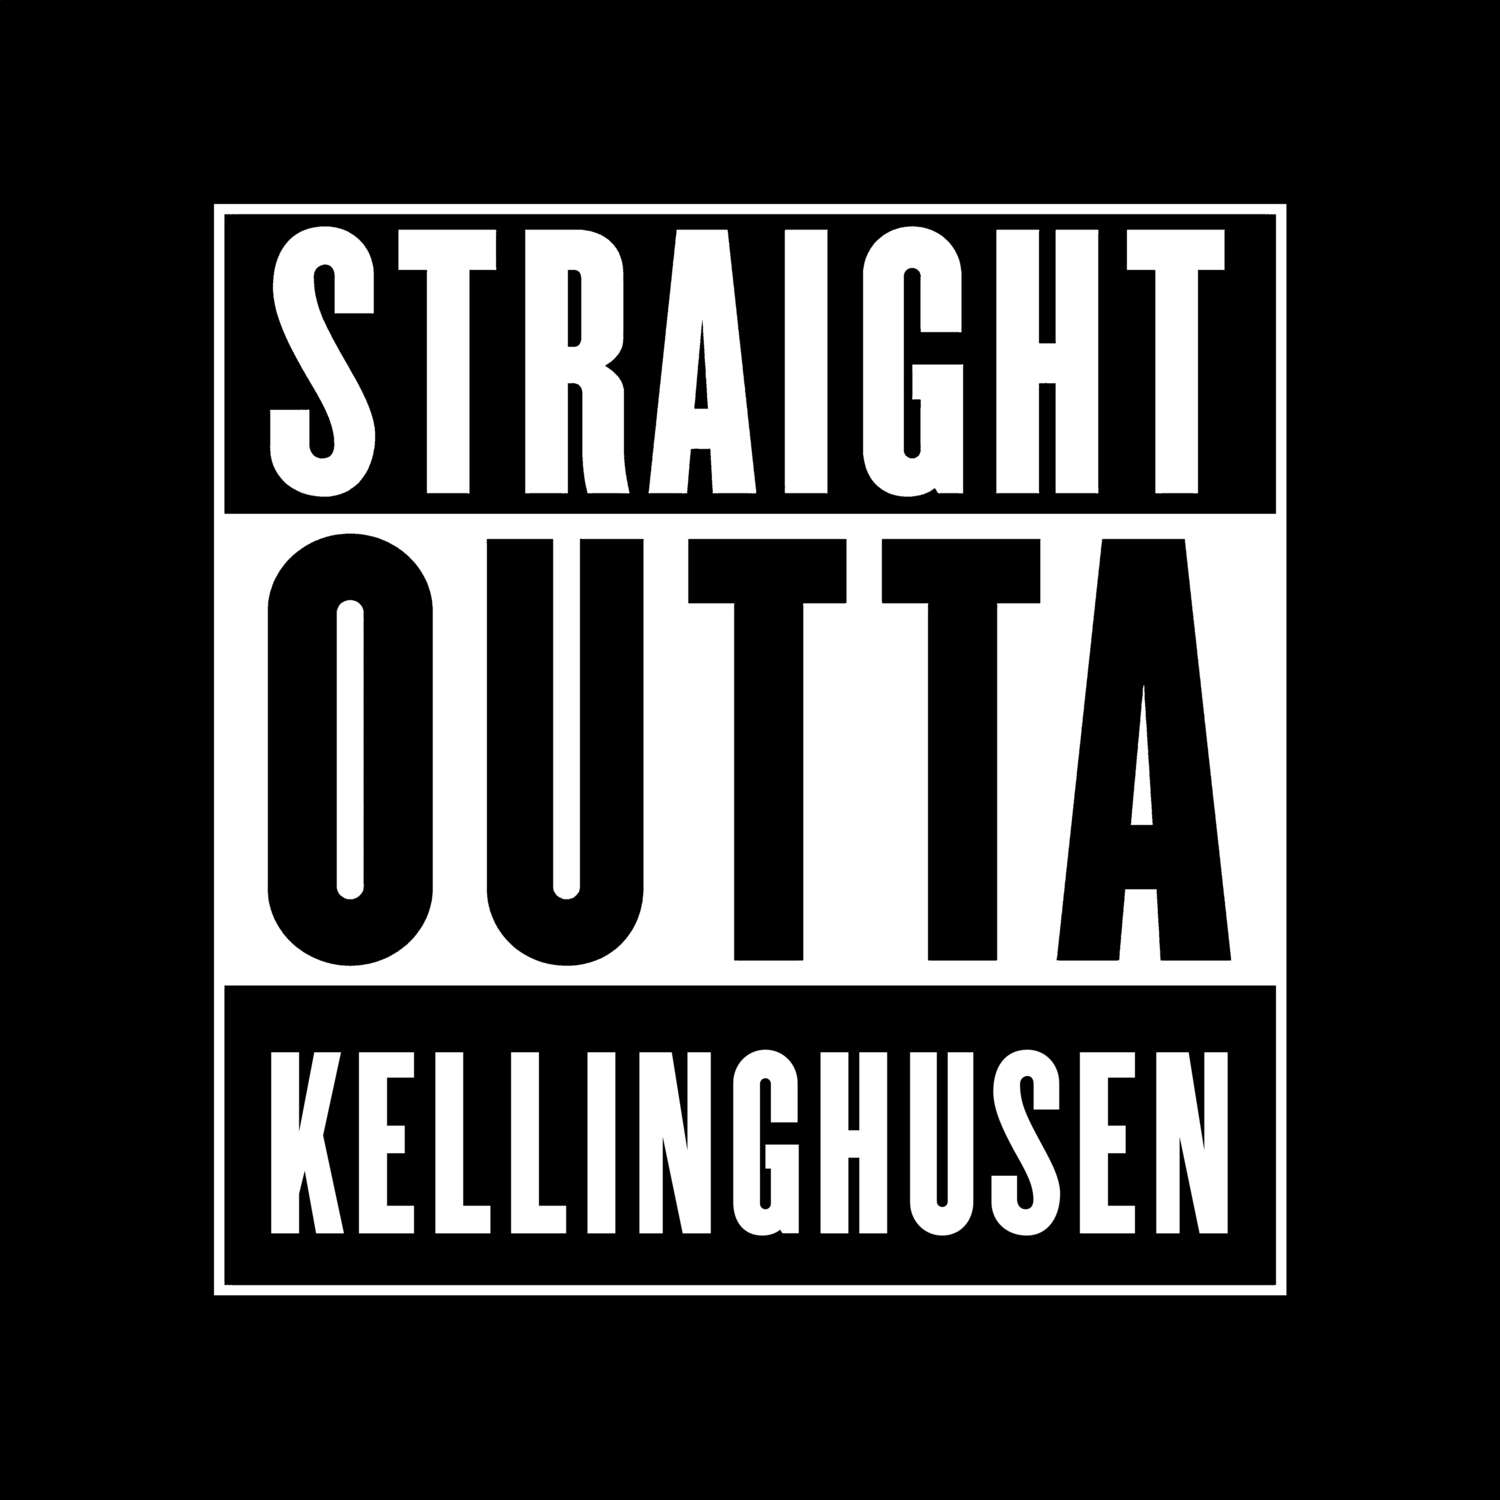 Kellinghusen T-Shirt »Straight Outta«